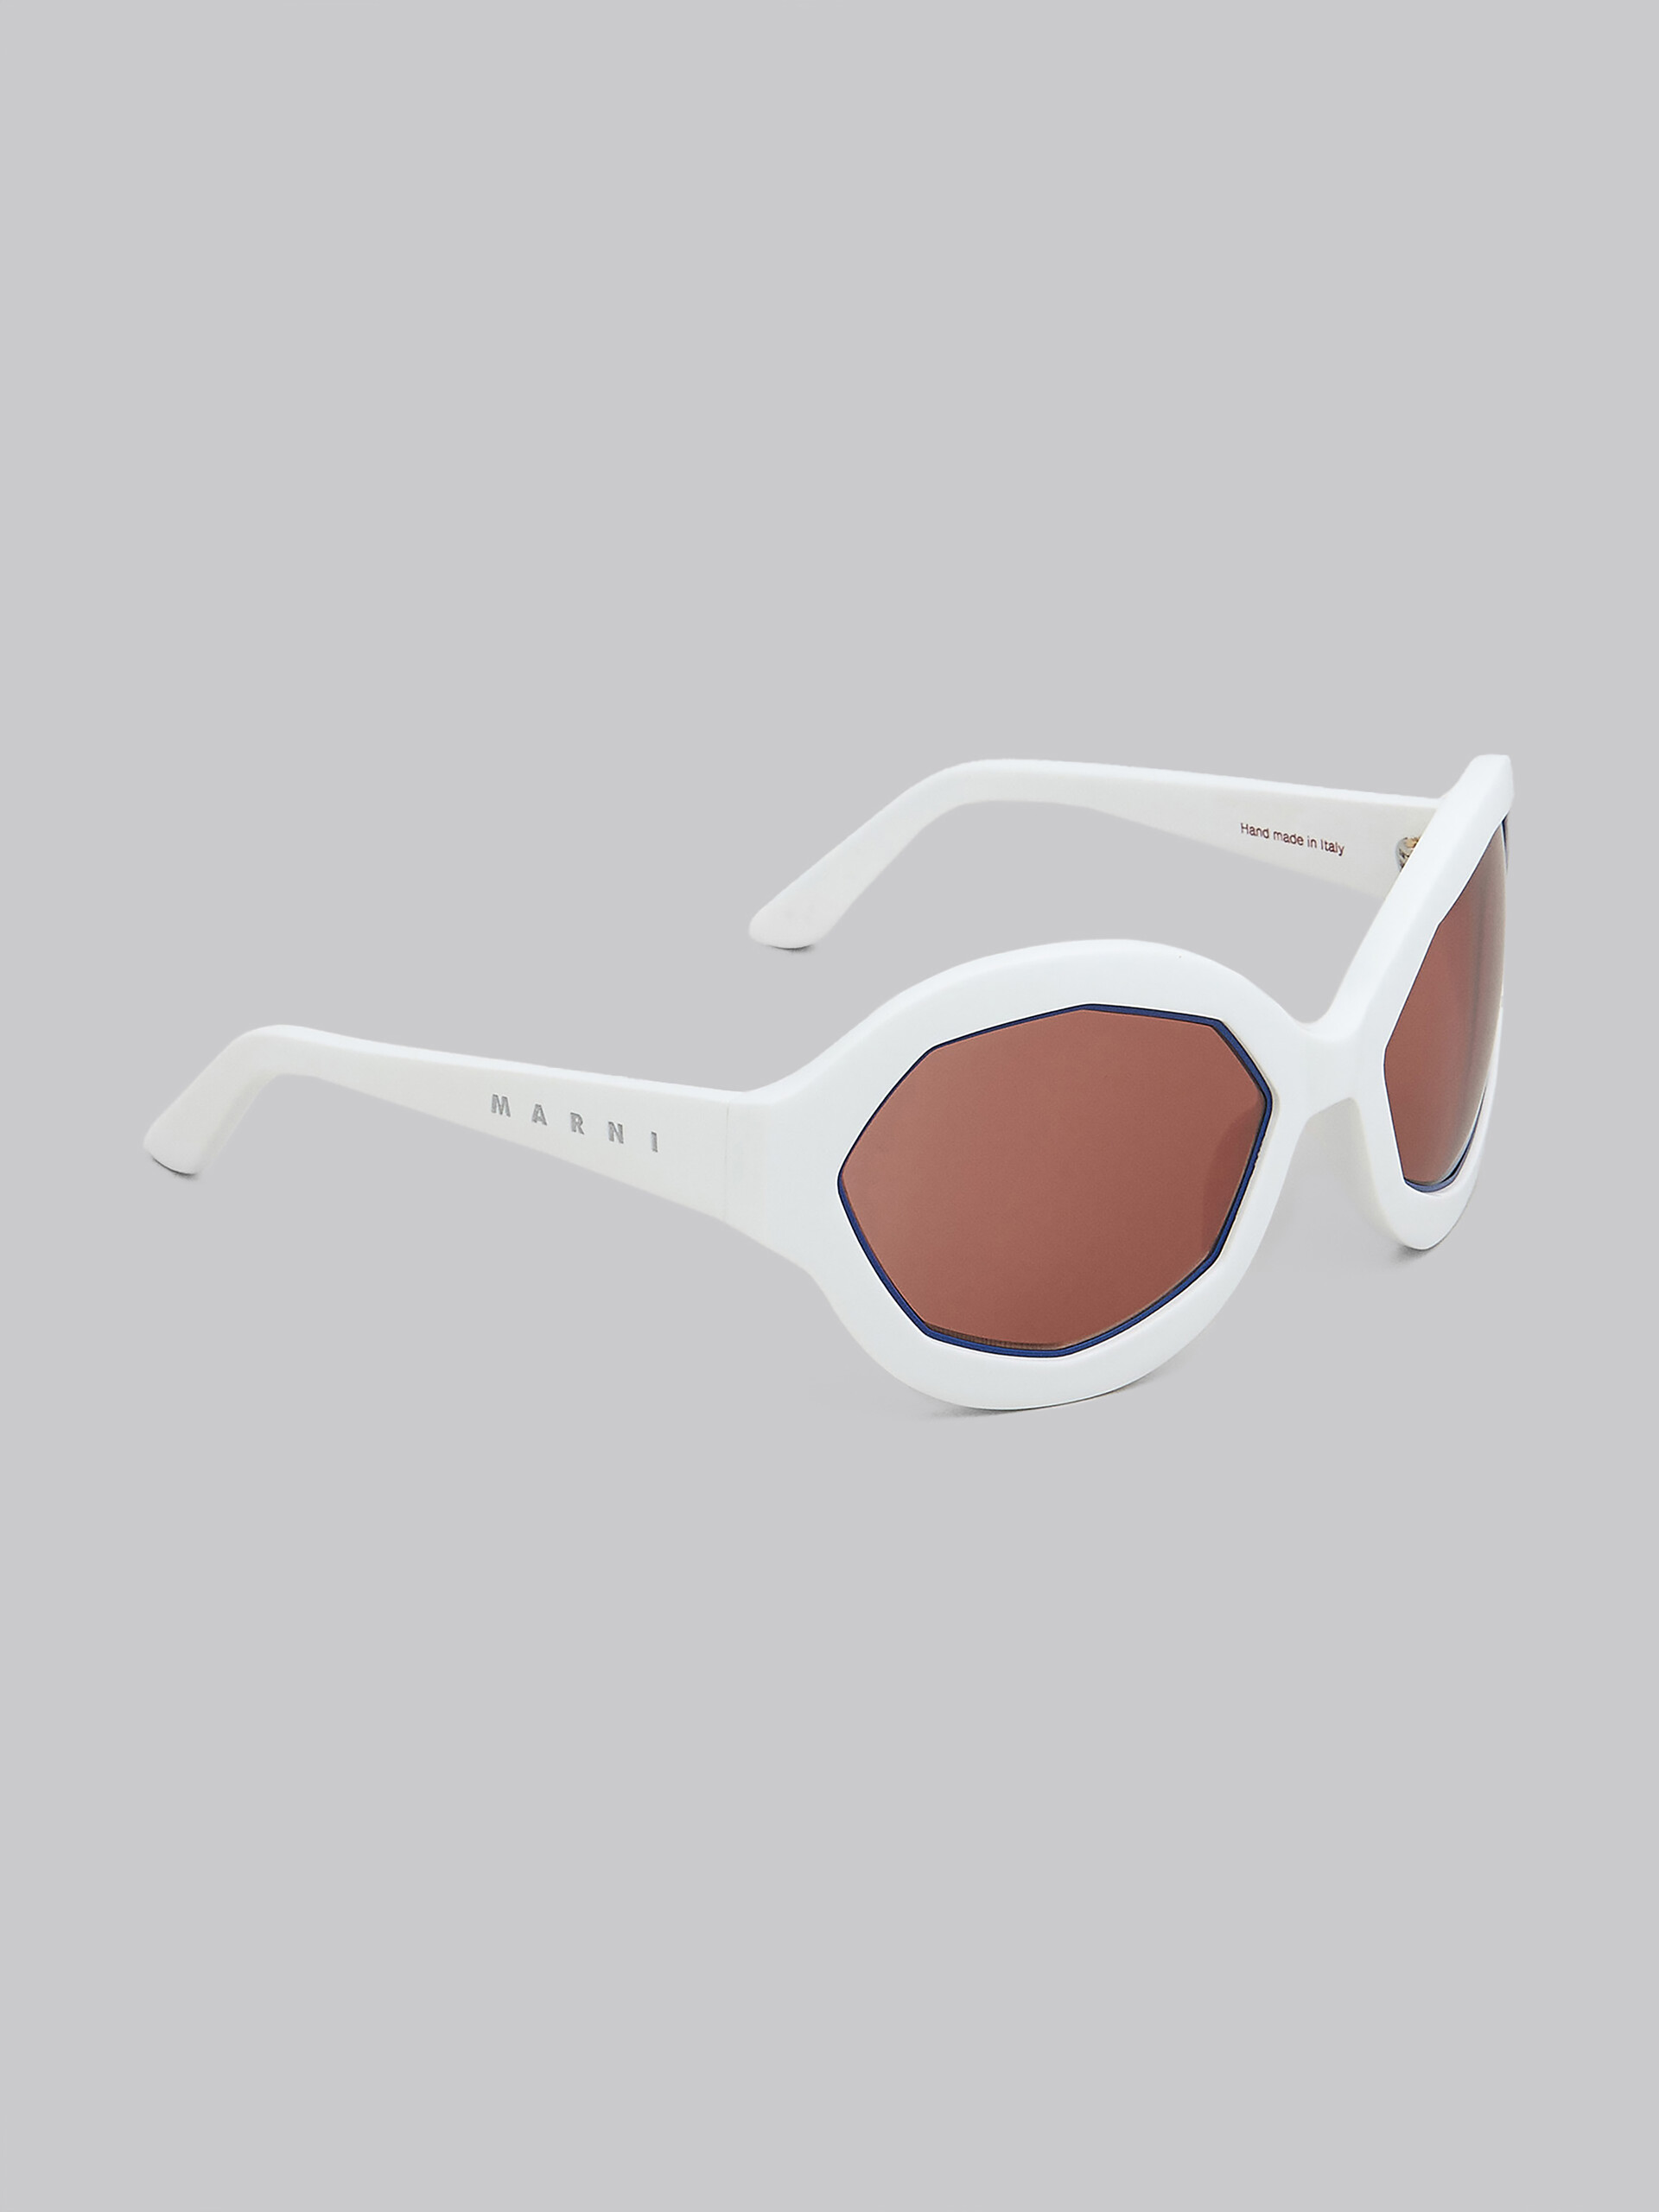 CUMULUS CLOUD white acetate sunglasses - Optical - Image 2